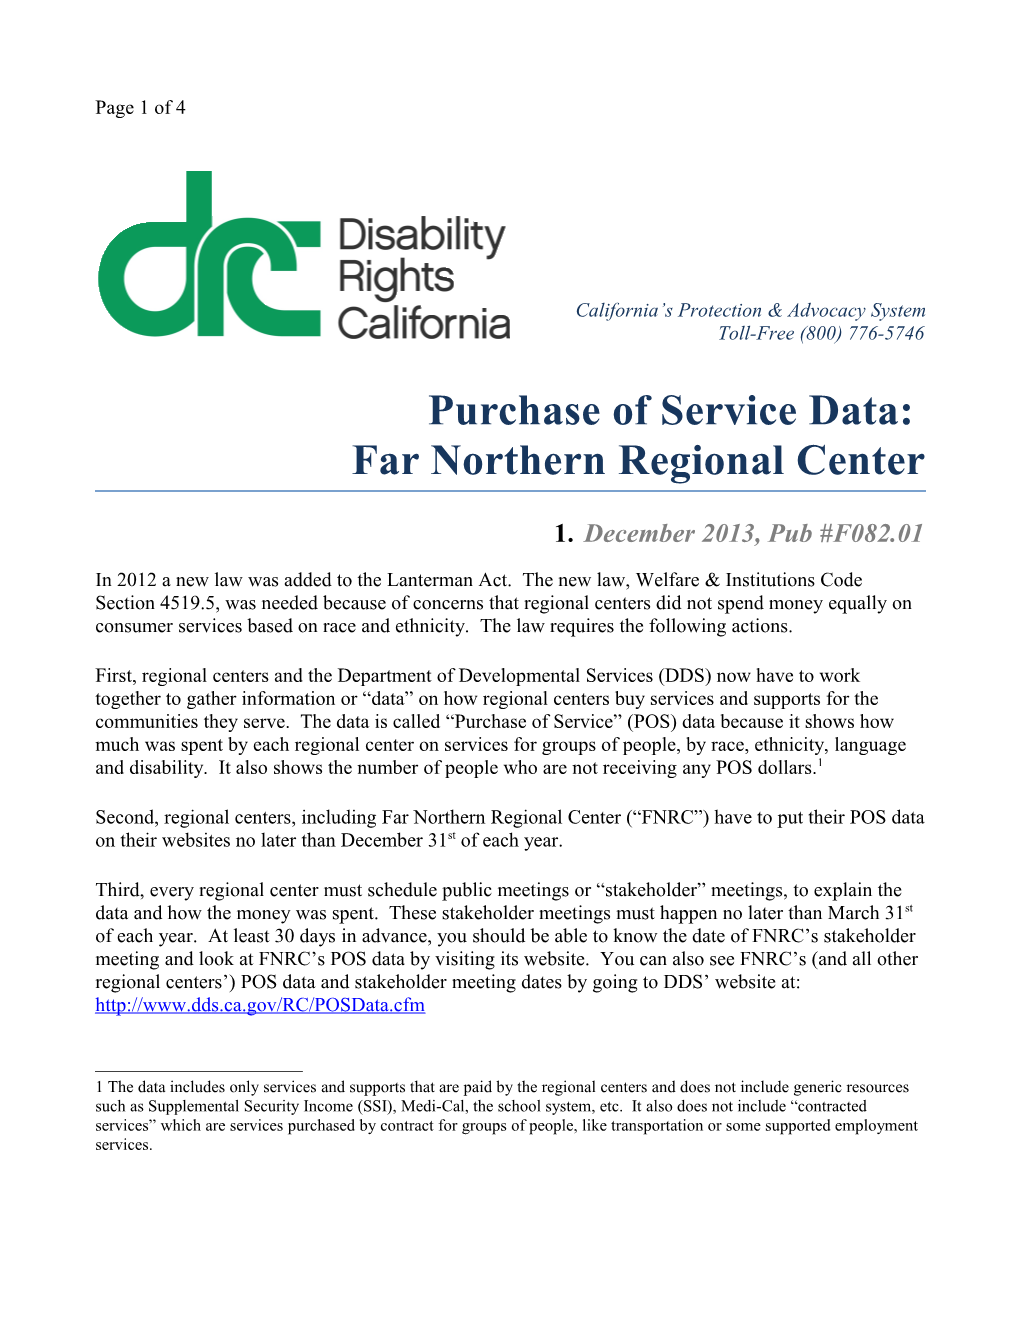 Purchase of Service Data: Far Northern Regional Center